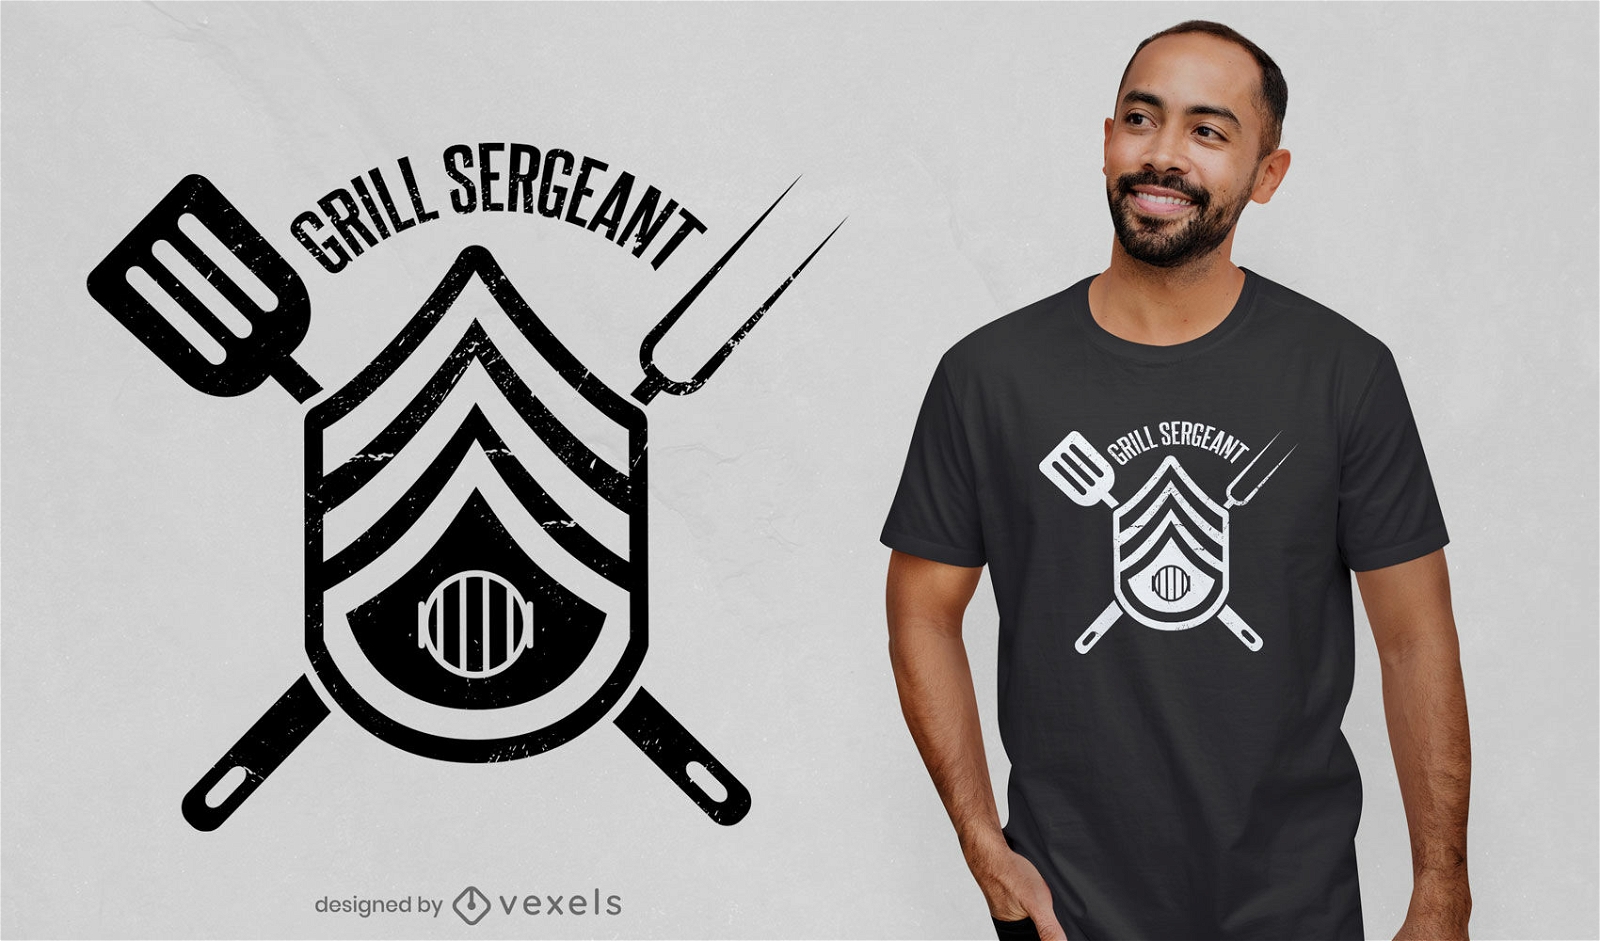 Grill BBQ Sergeant badge t-shirt design